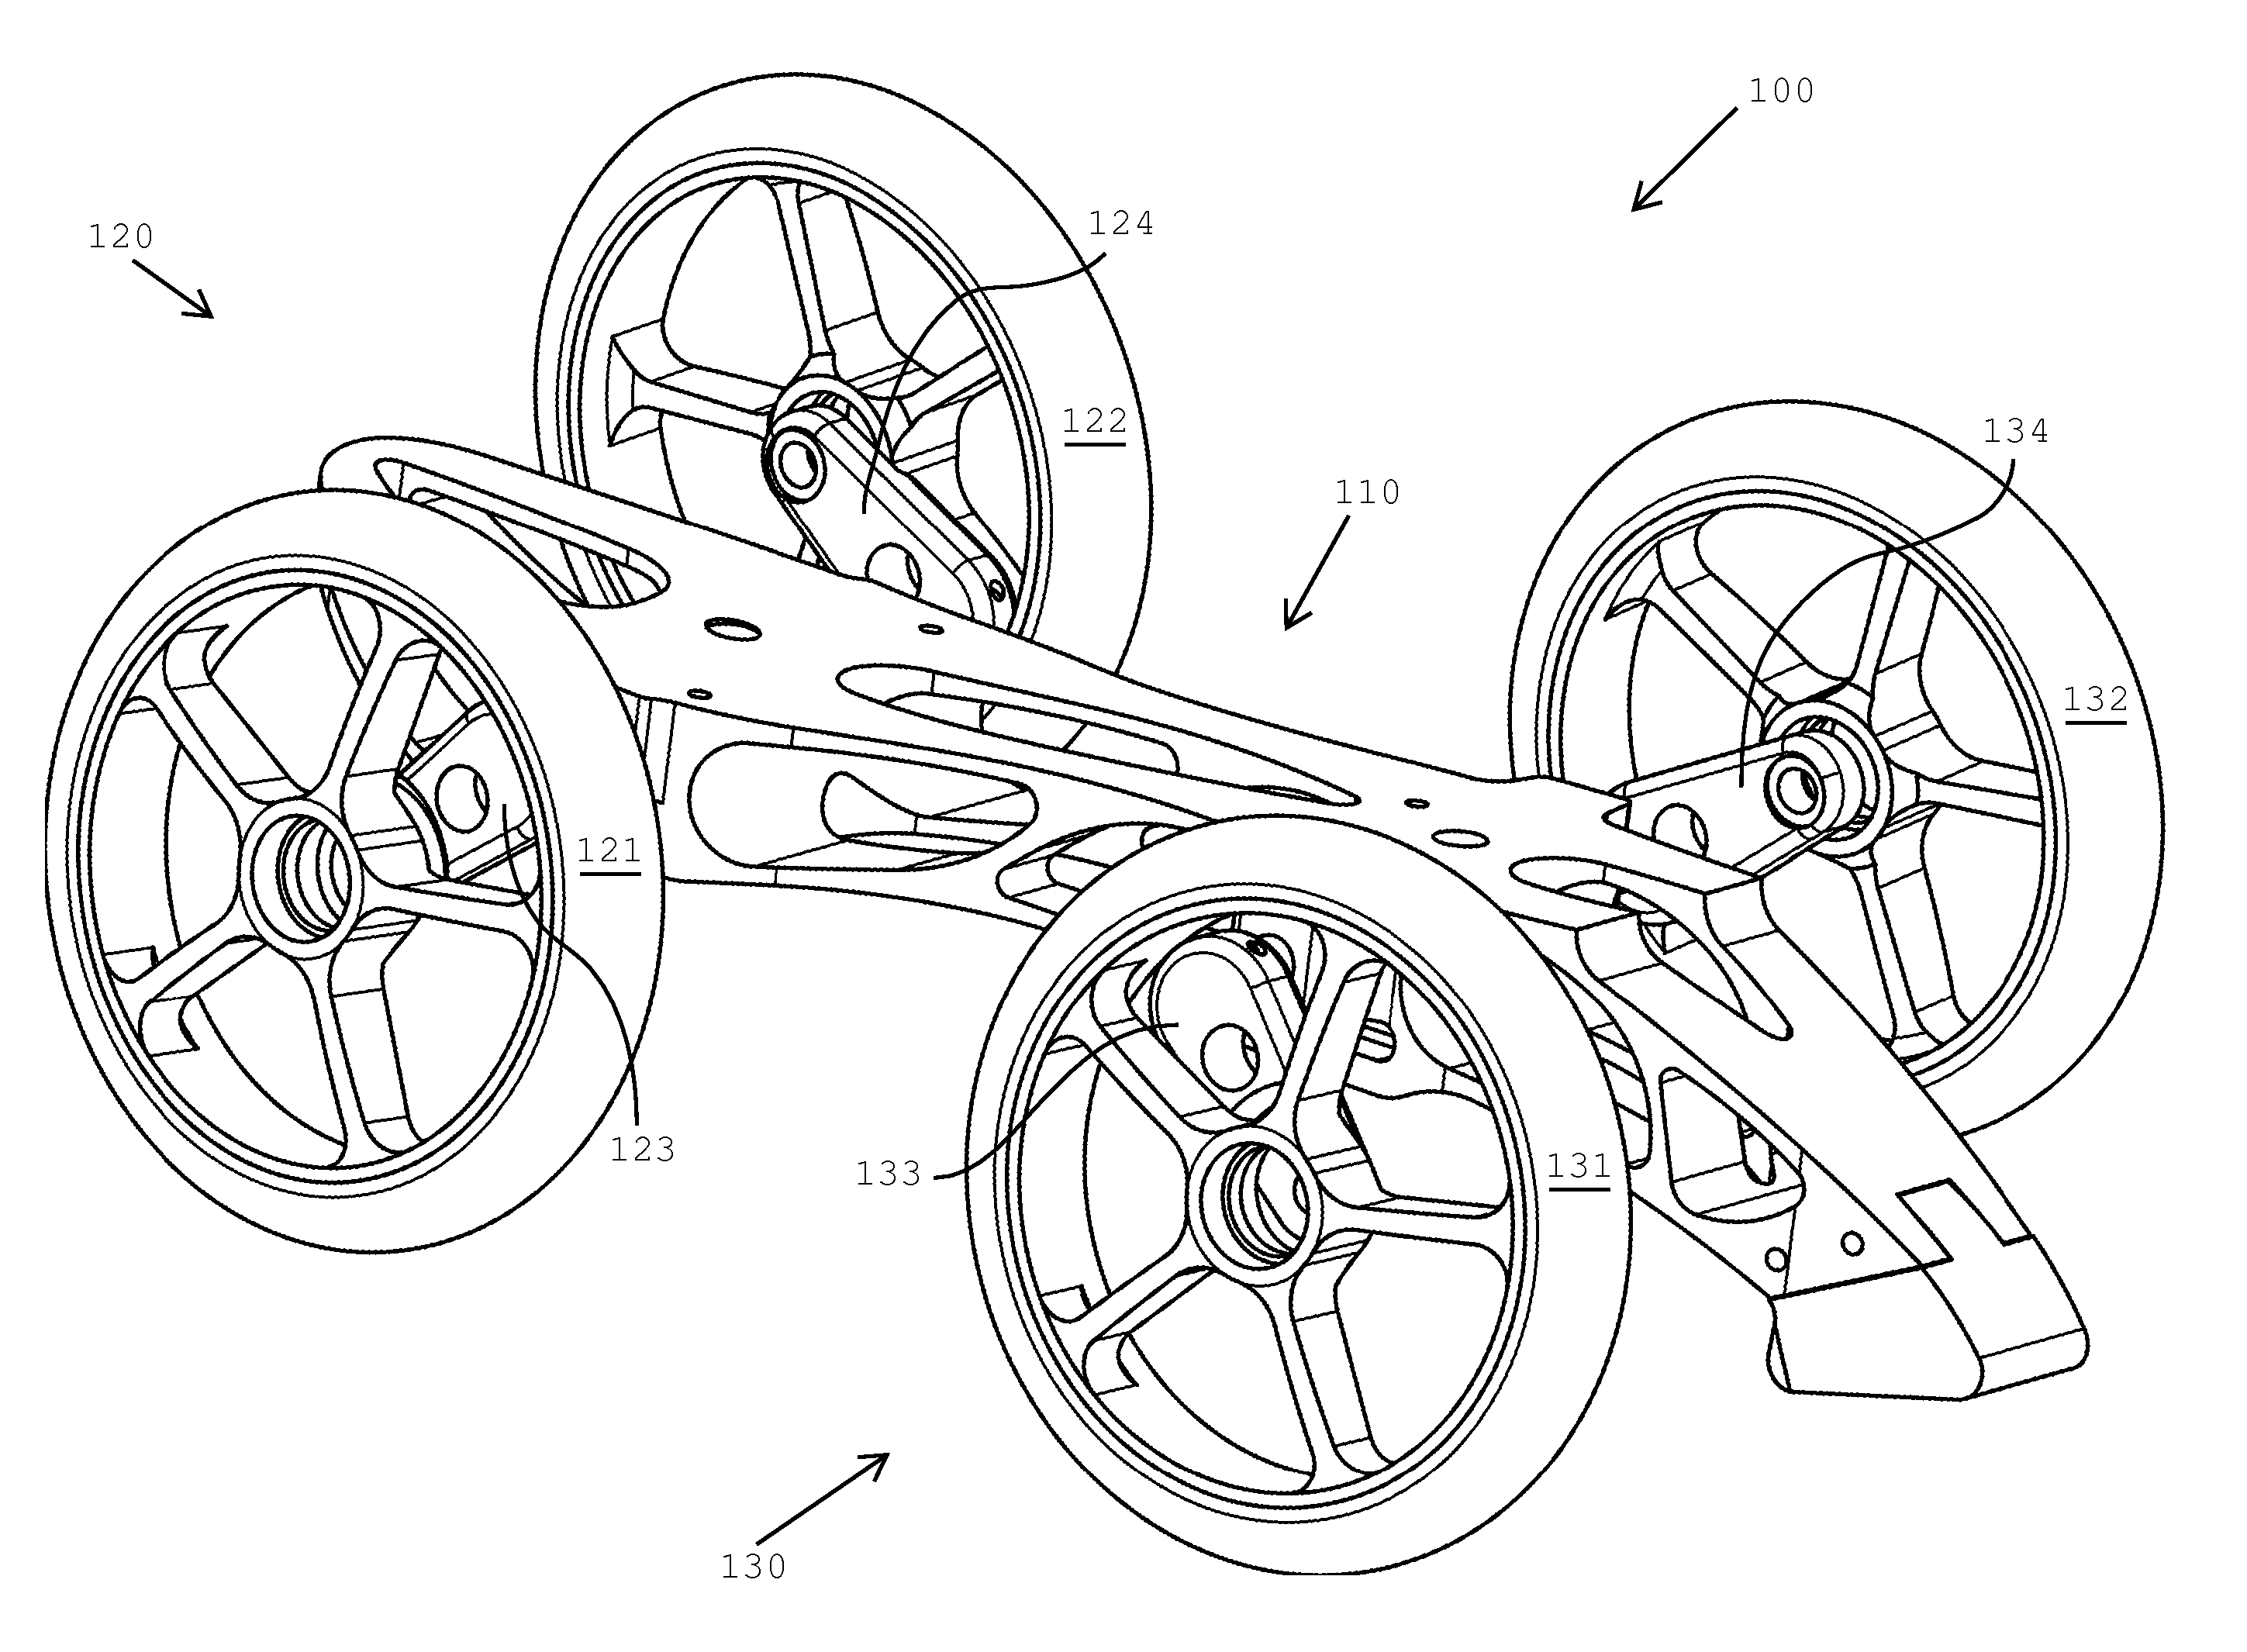 Lean-to-turn wheeled device